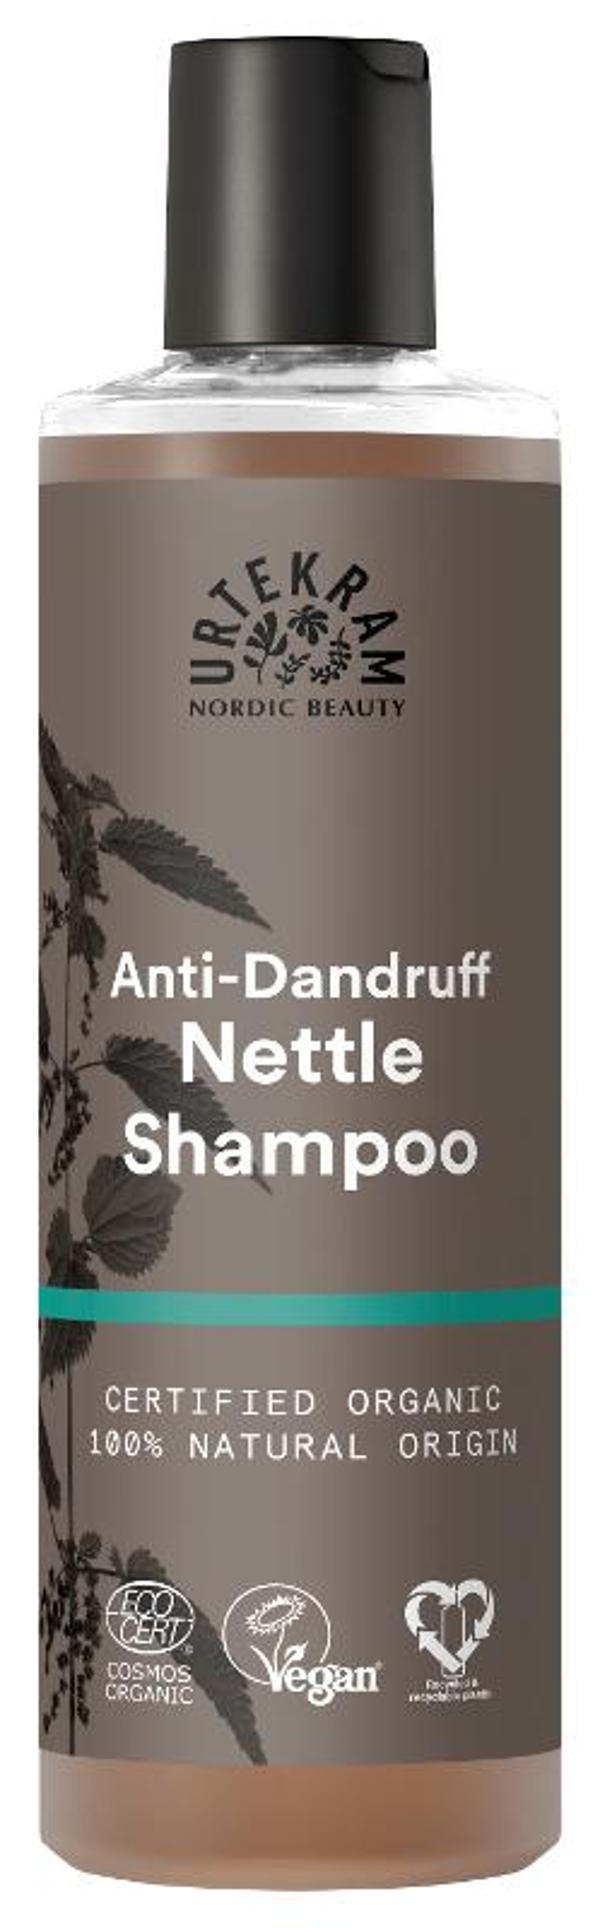 Produktfoto zu Shampoo Brennnessel 250ml